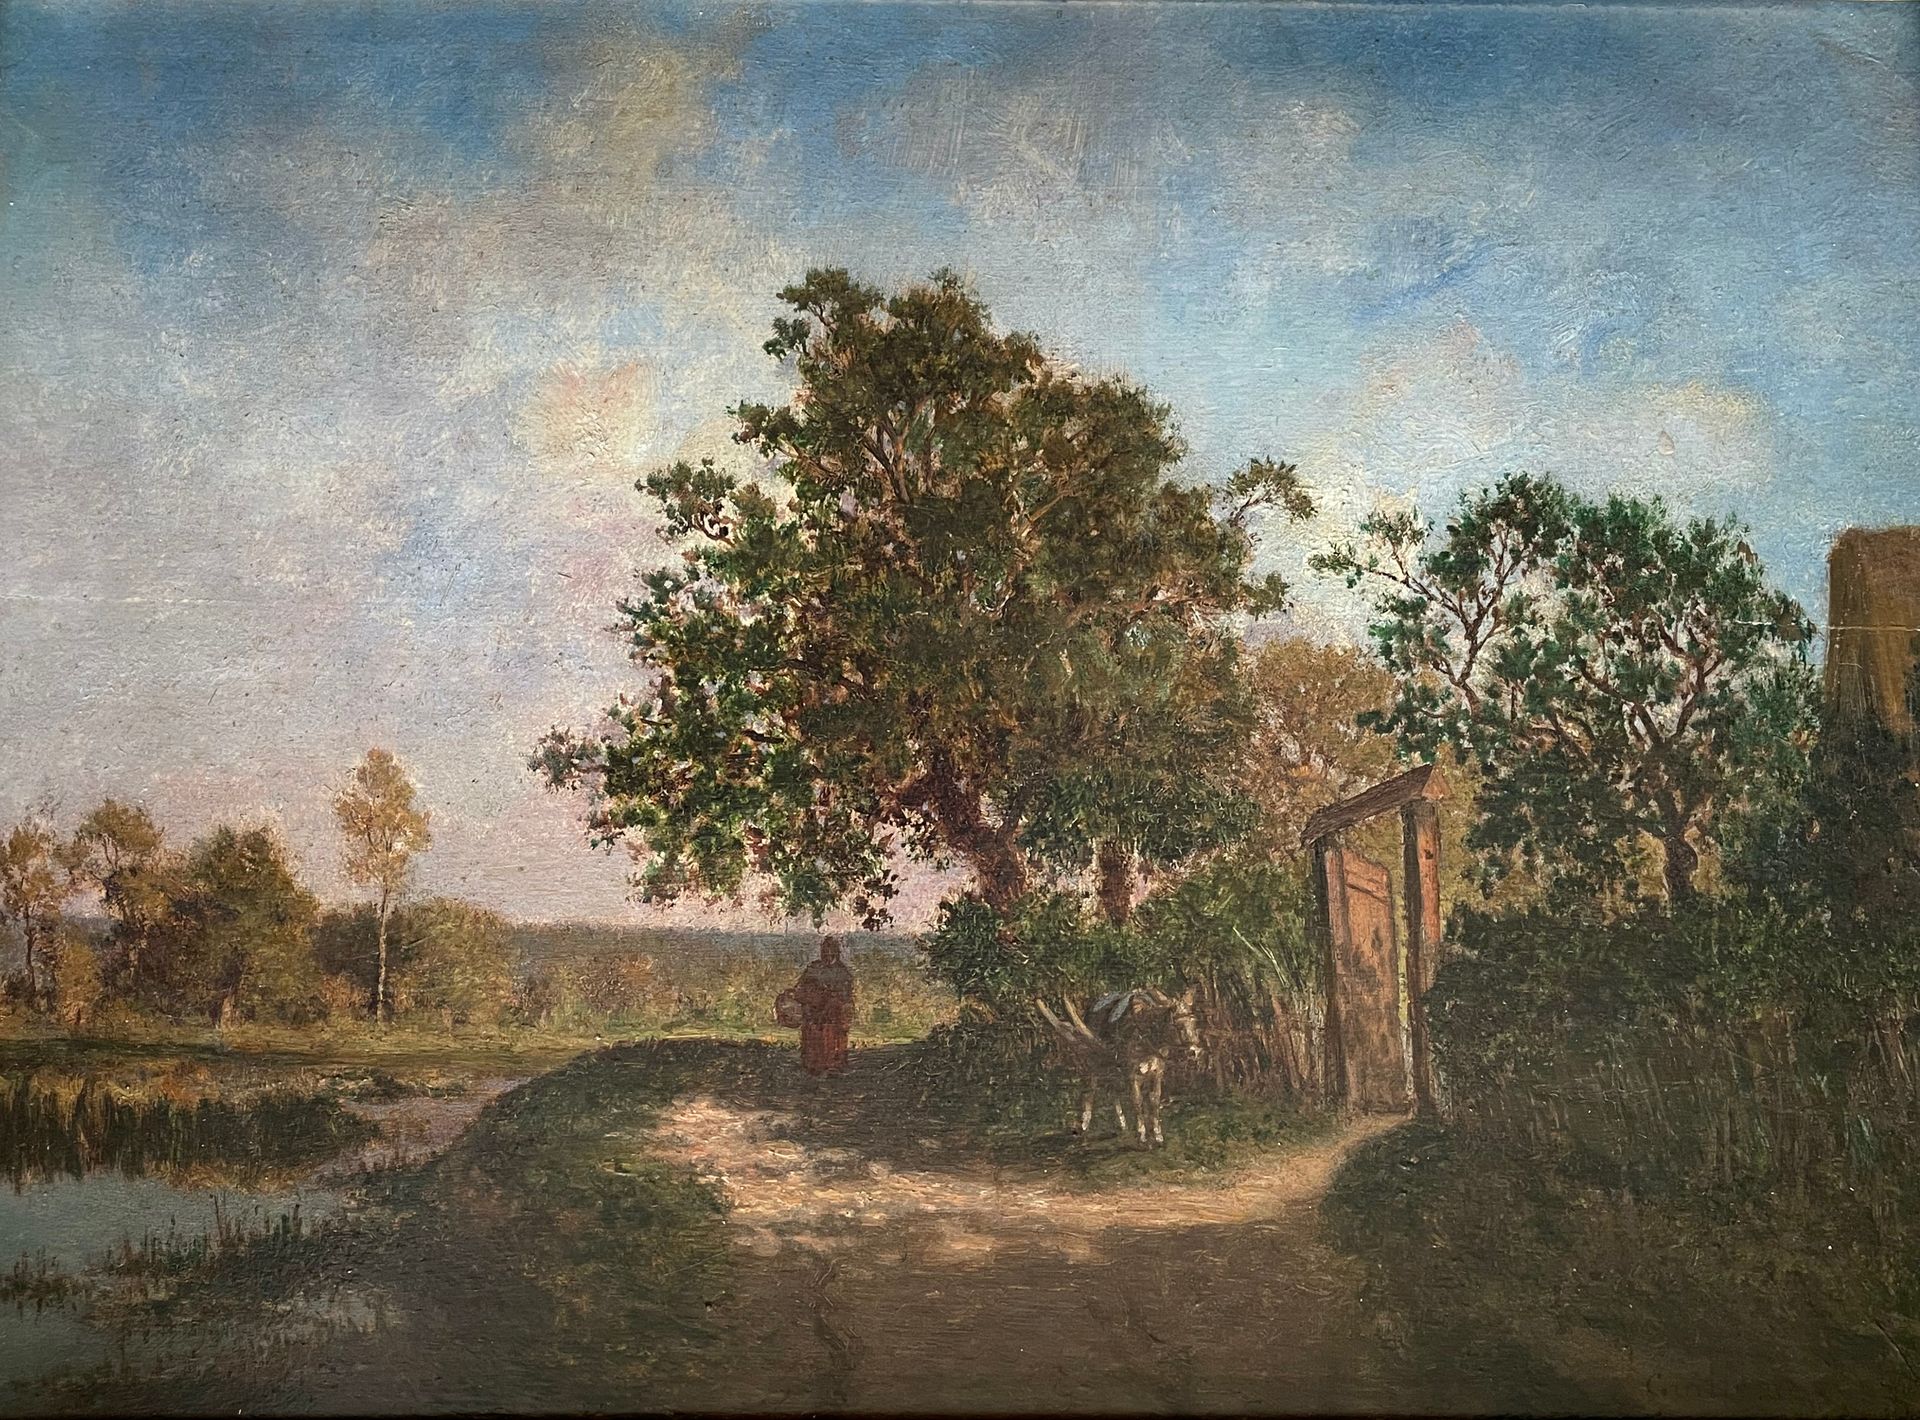 Ernest GUILLEMER (1839-1913) 
农妇的回归
油画，右下方签名
24 x 32.5 cm